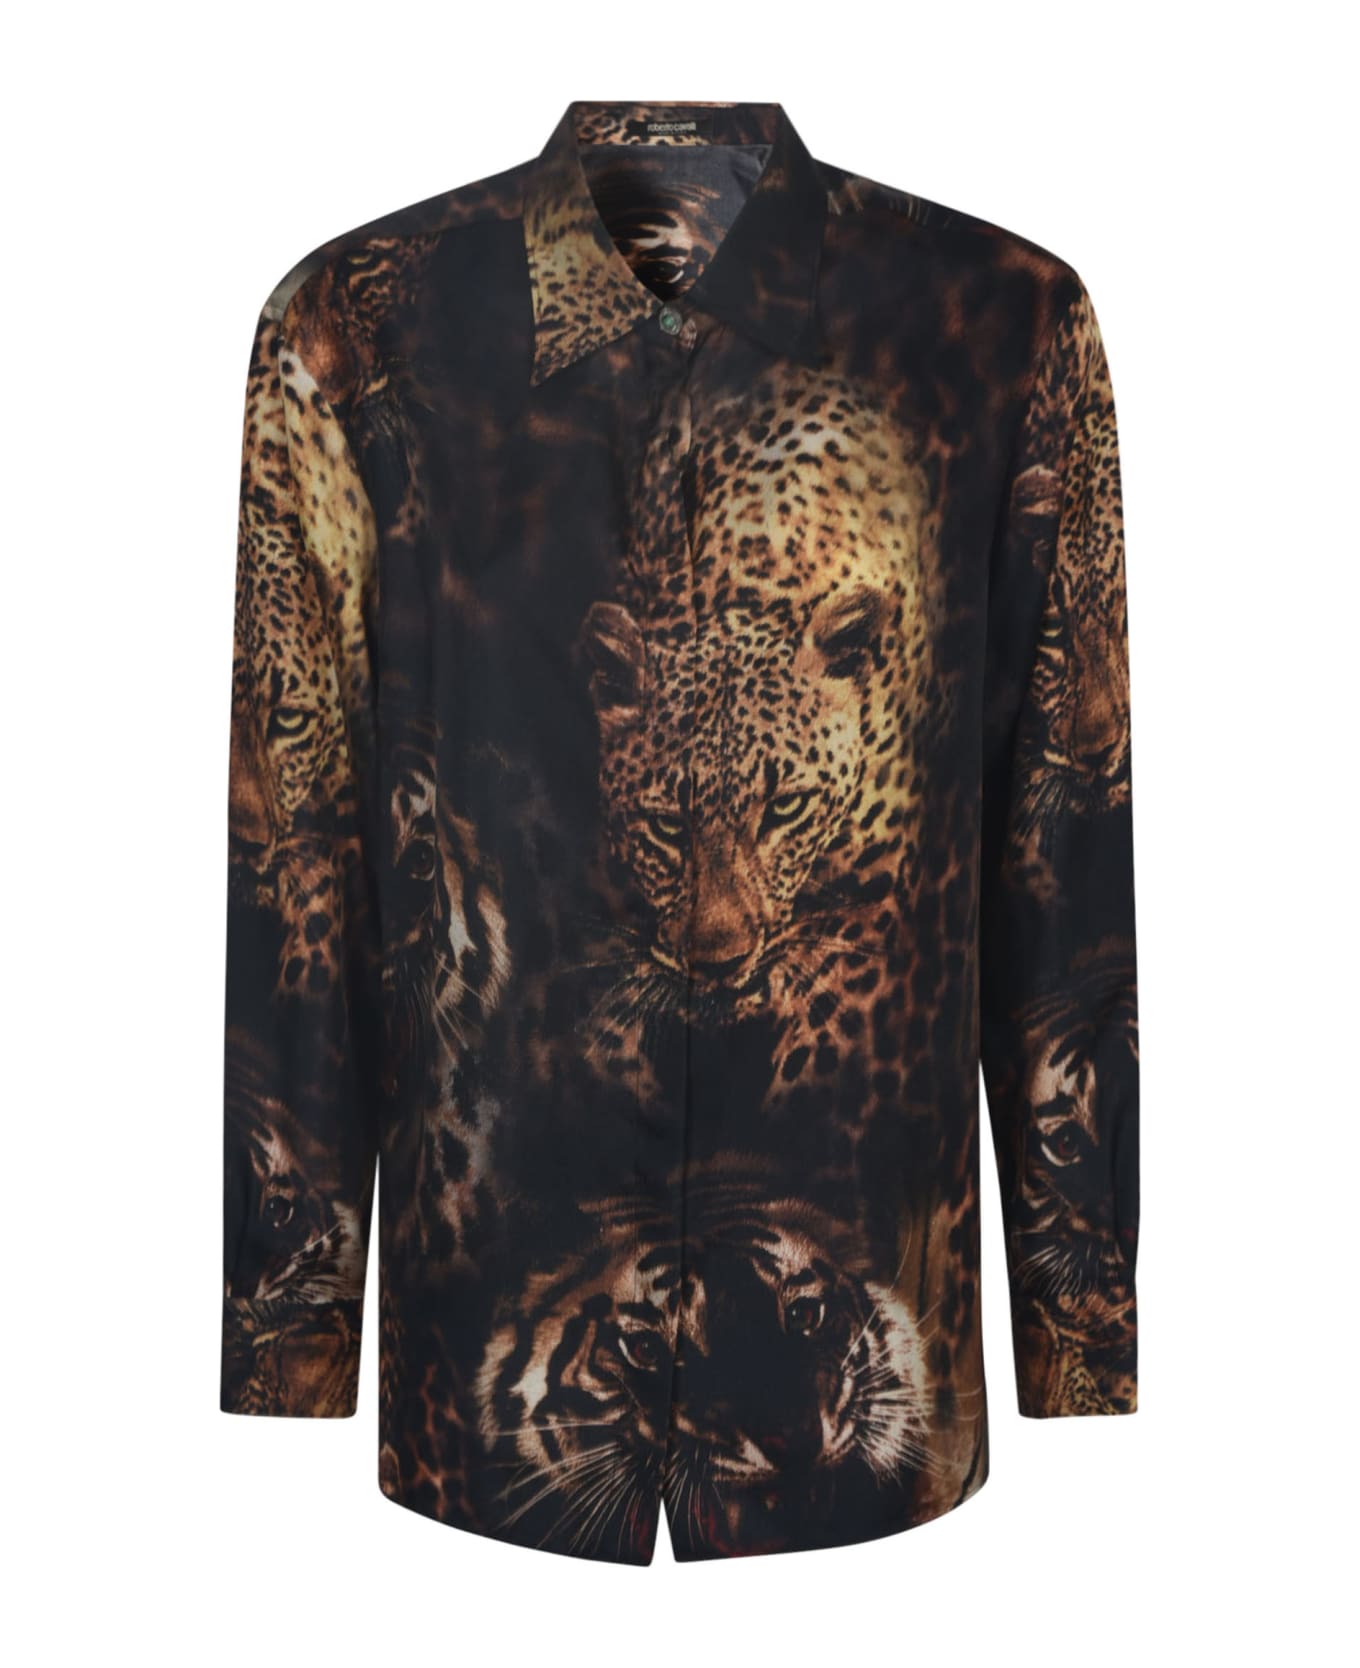 Roberto Cavalli Printed Tiger Shirt - Rust シャツ